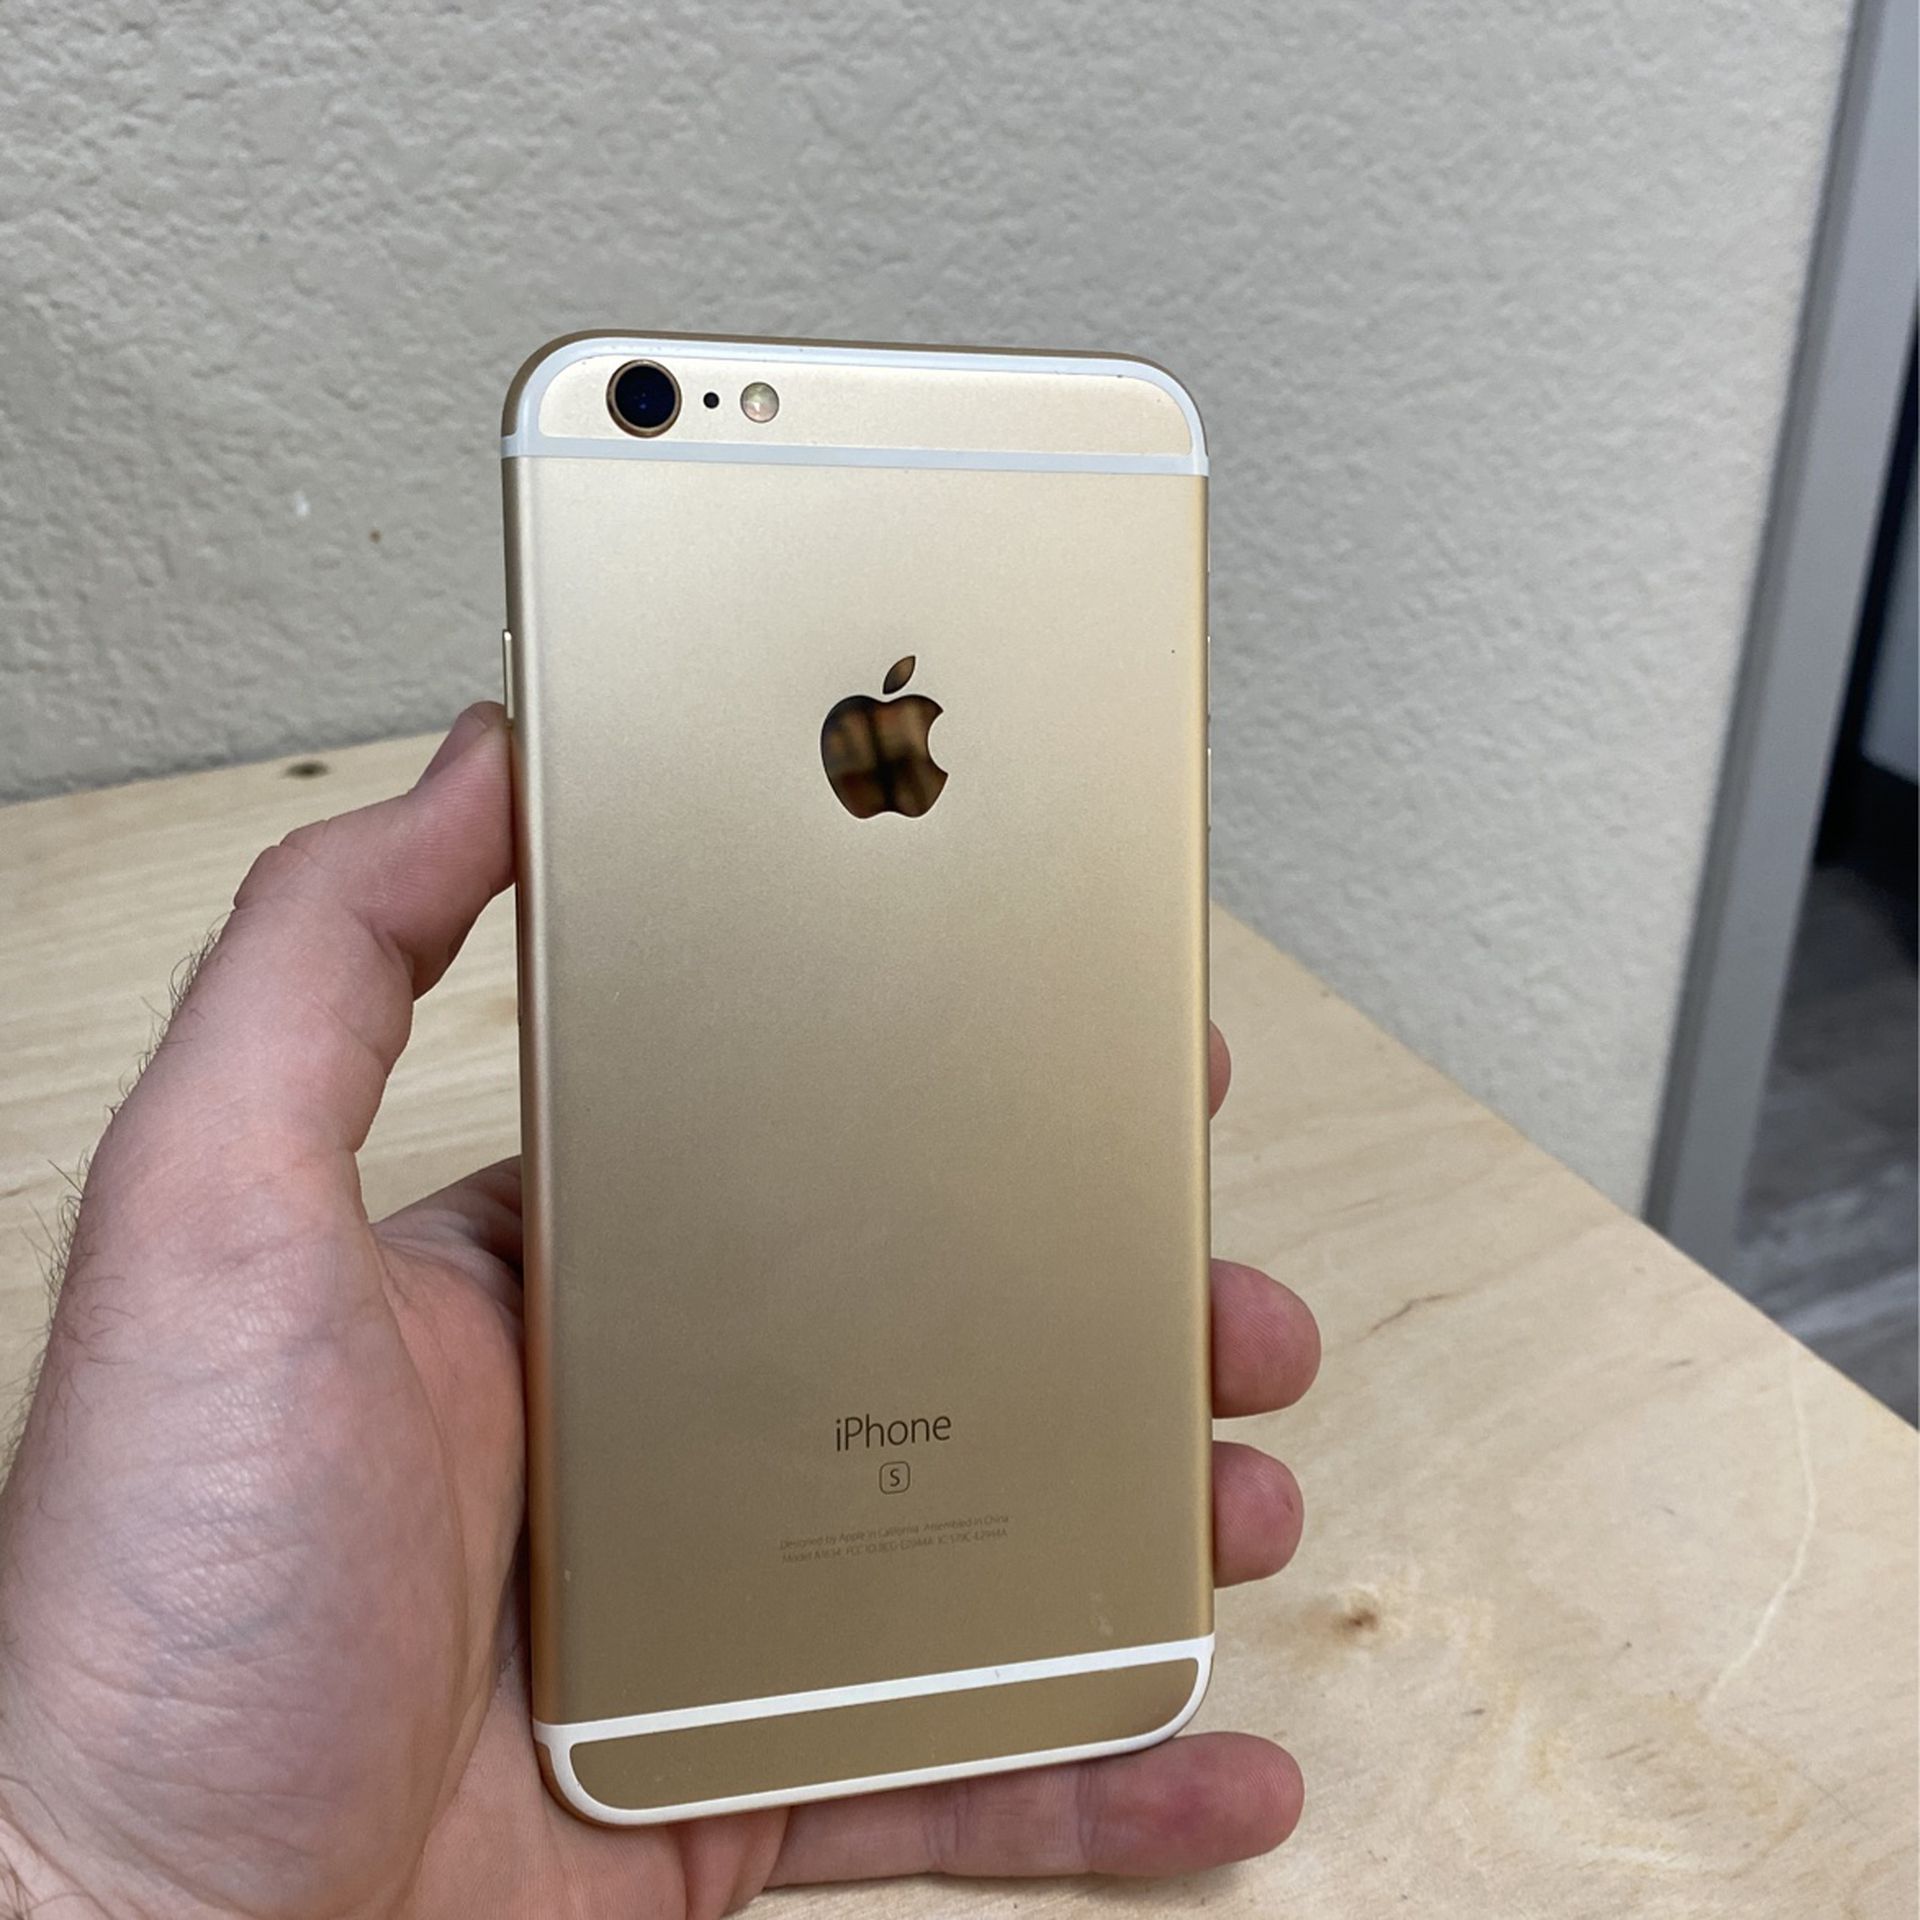 Cava dolor de muelas Atravesar iPhone 6s Plus 16gb Unlocked $50 Down for Sale in Las Vegas, NV - OfferUp